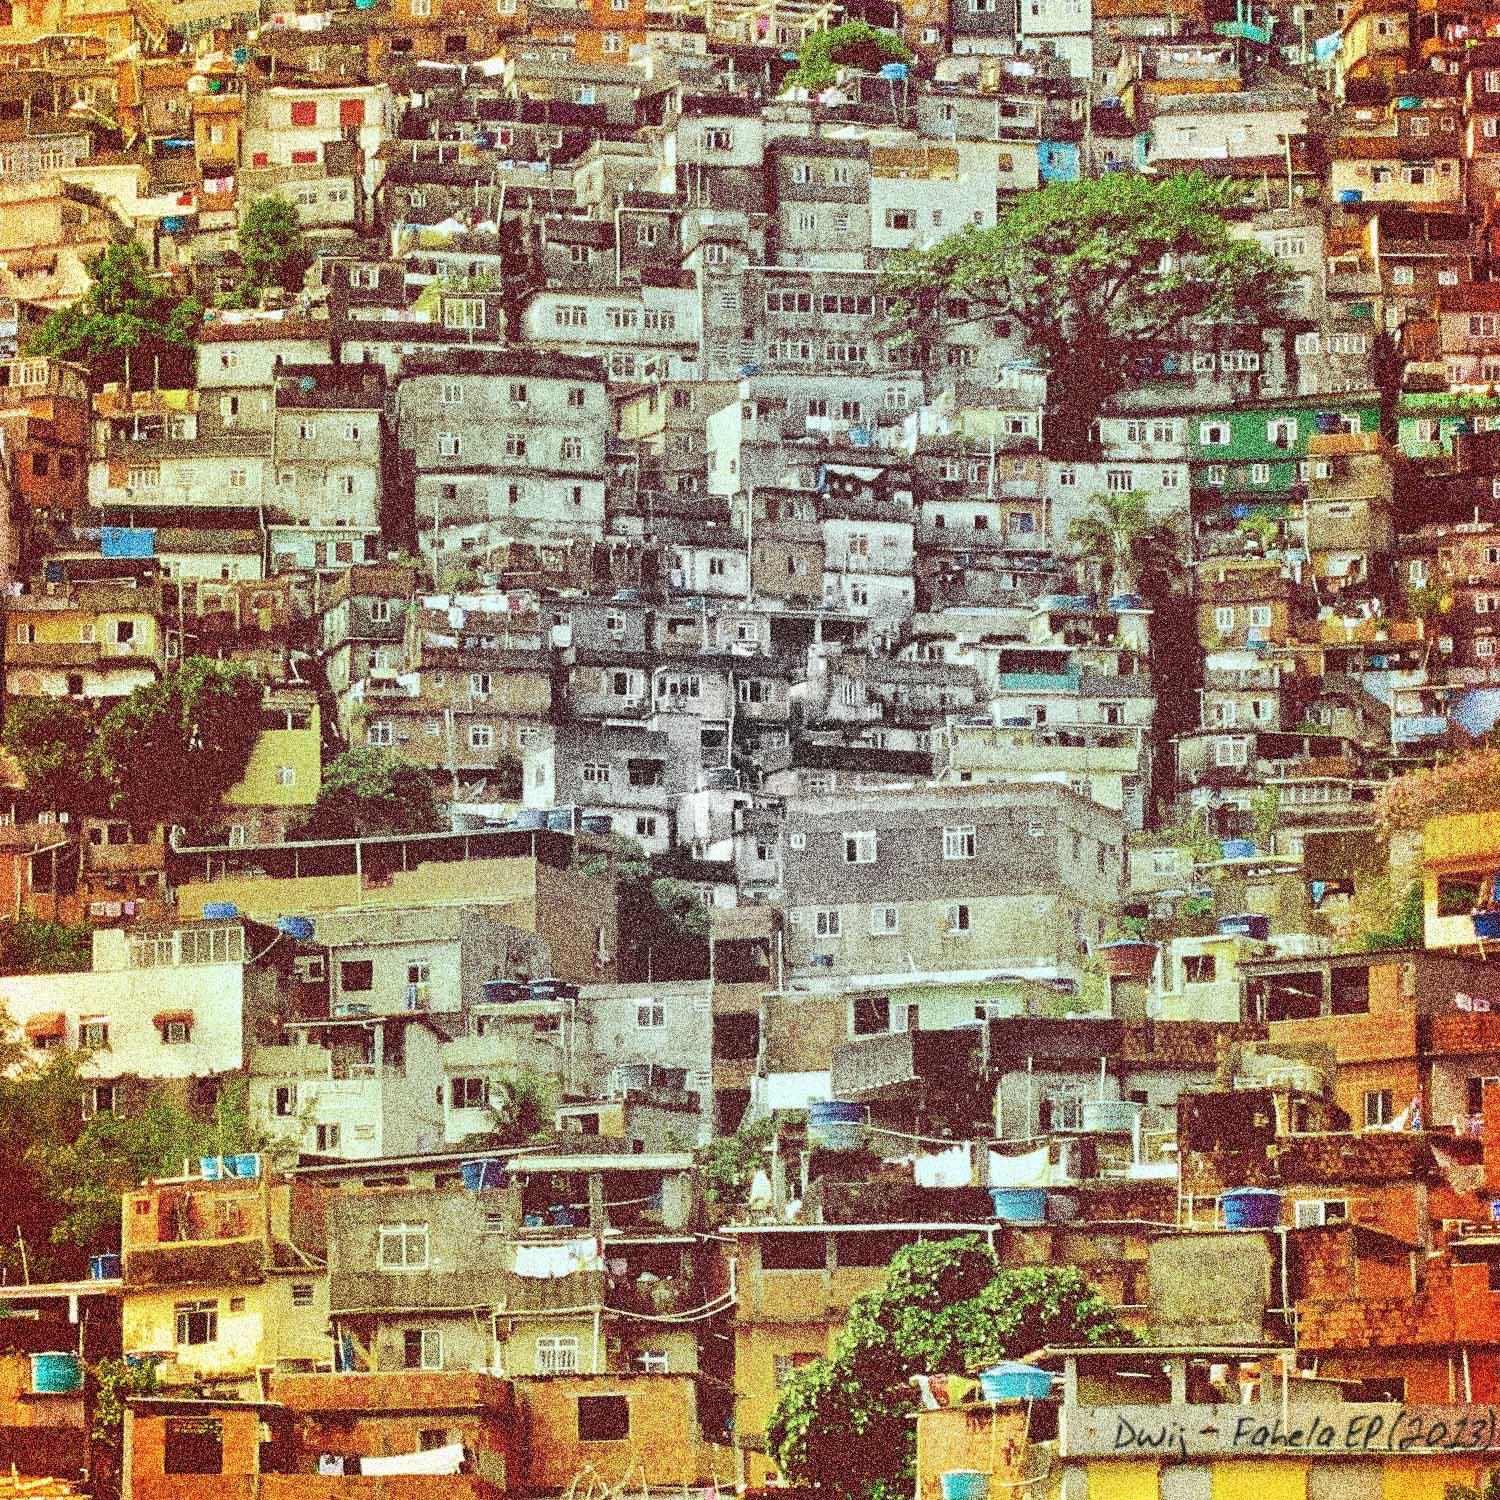 Dwij - Favela